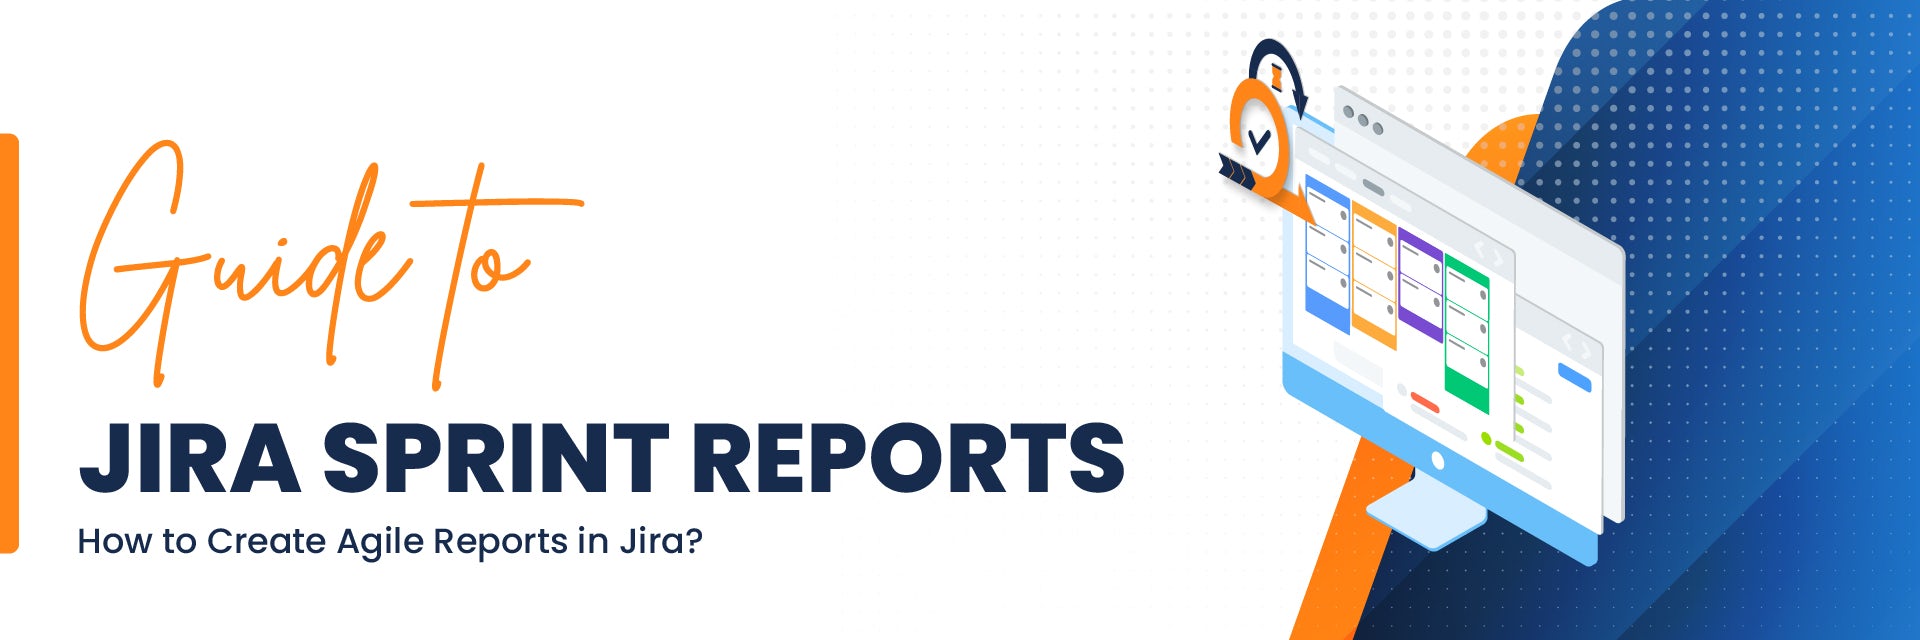 Jira Sprint Reports: How to Create Agile Reports in Jira